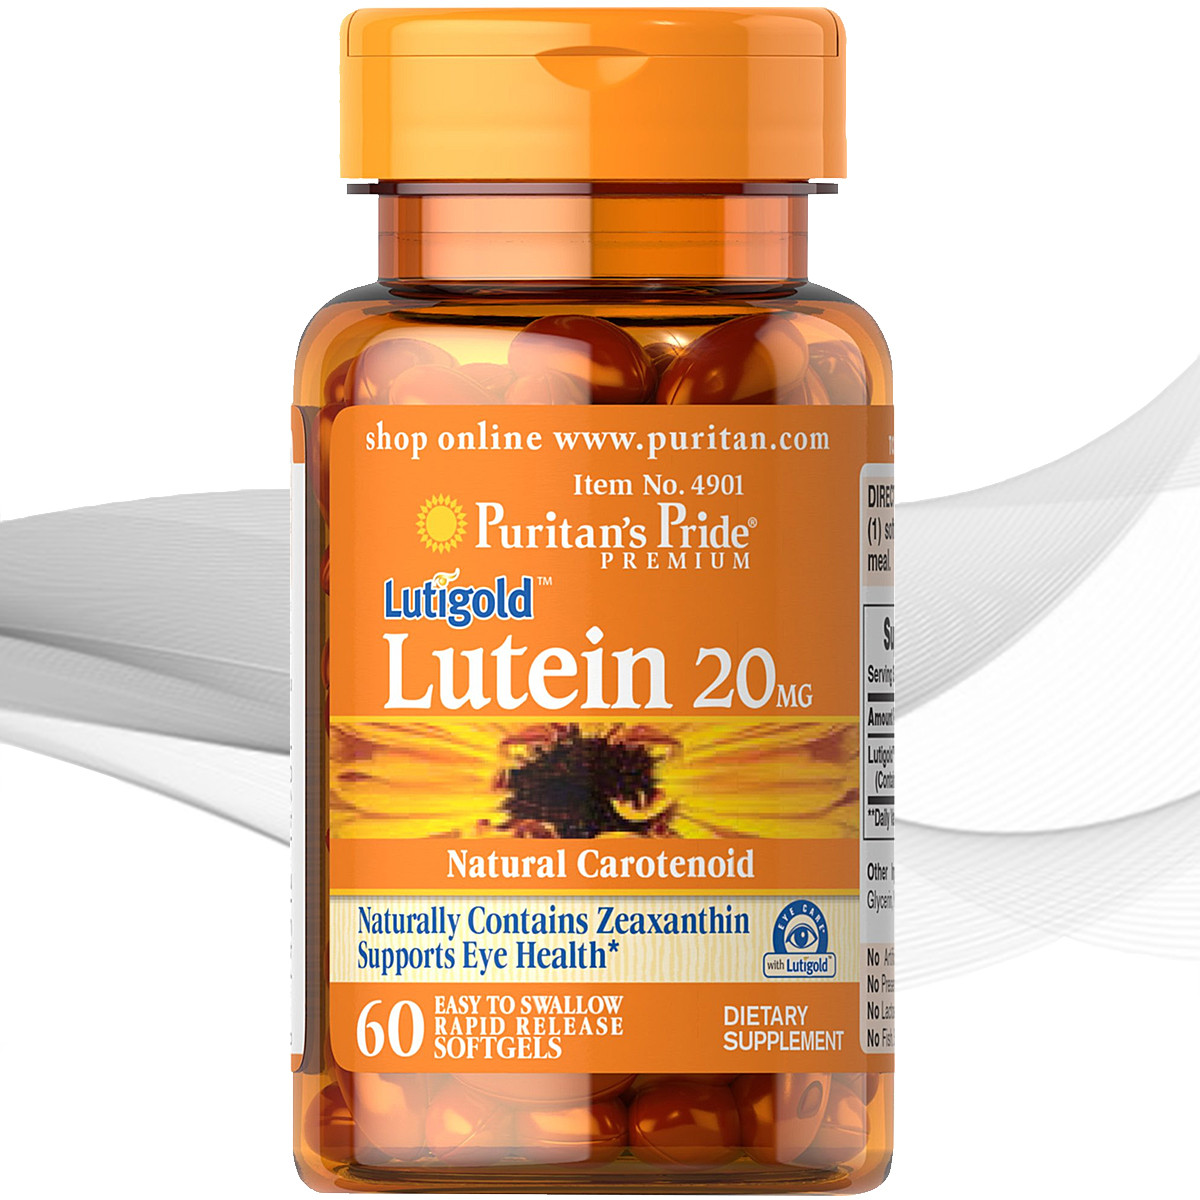 Puritans Pride Lutein 20 mg 60 softgels